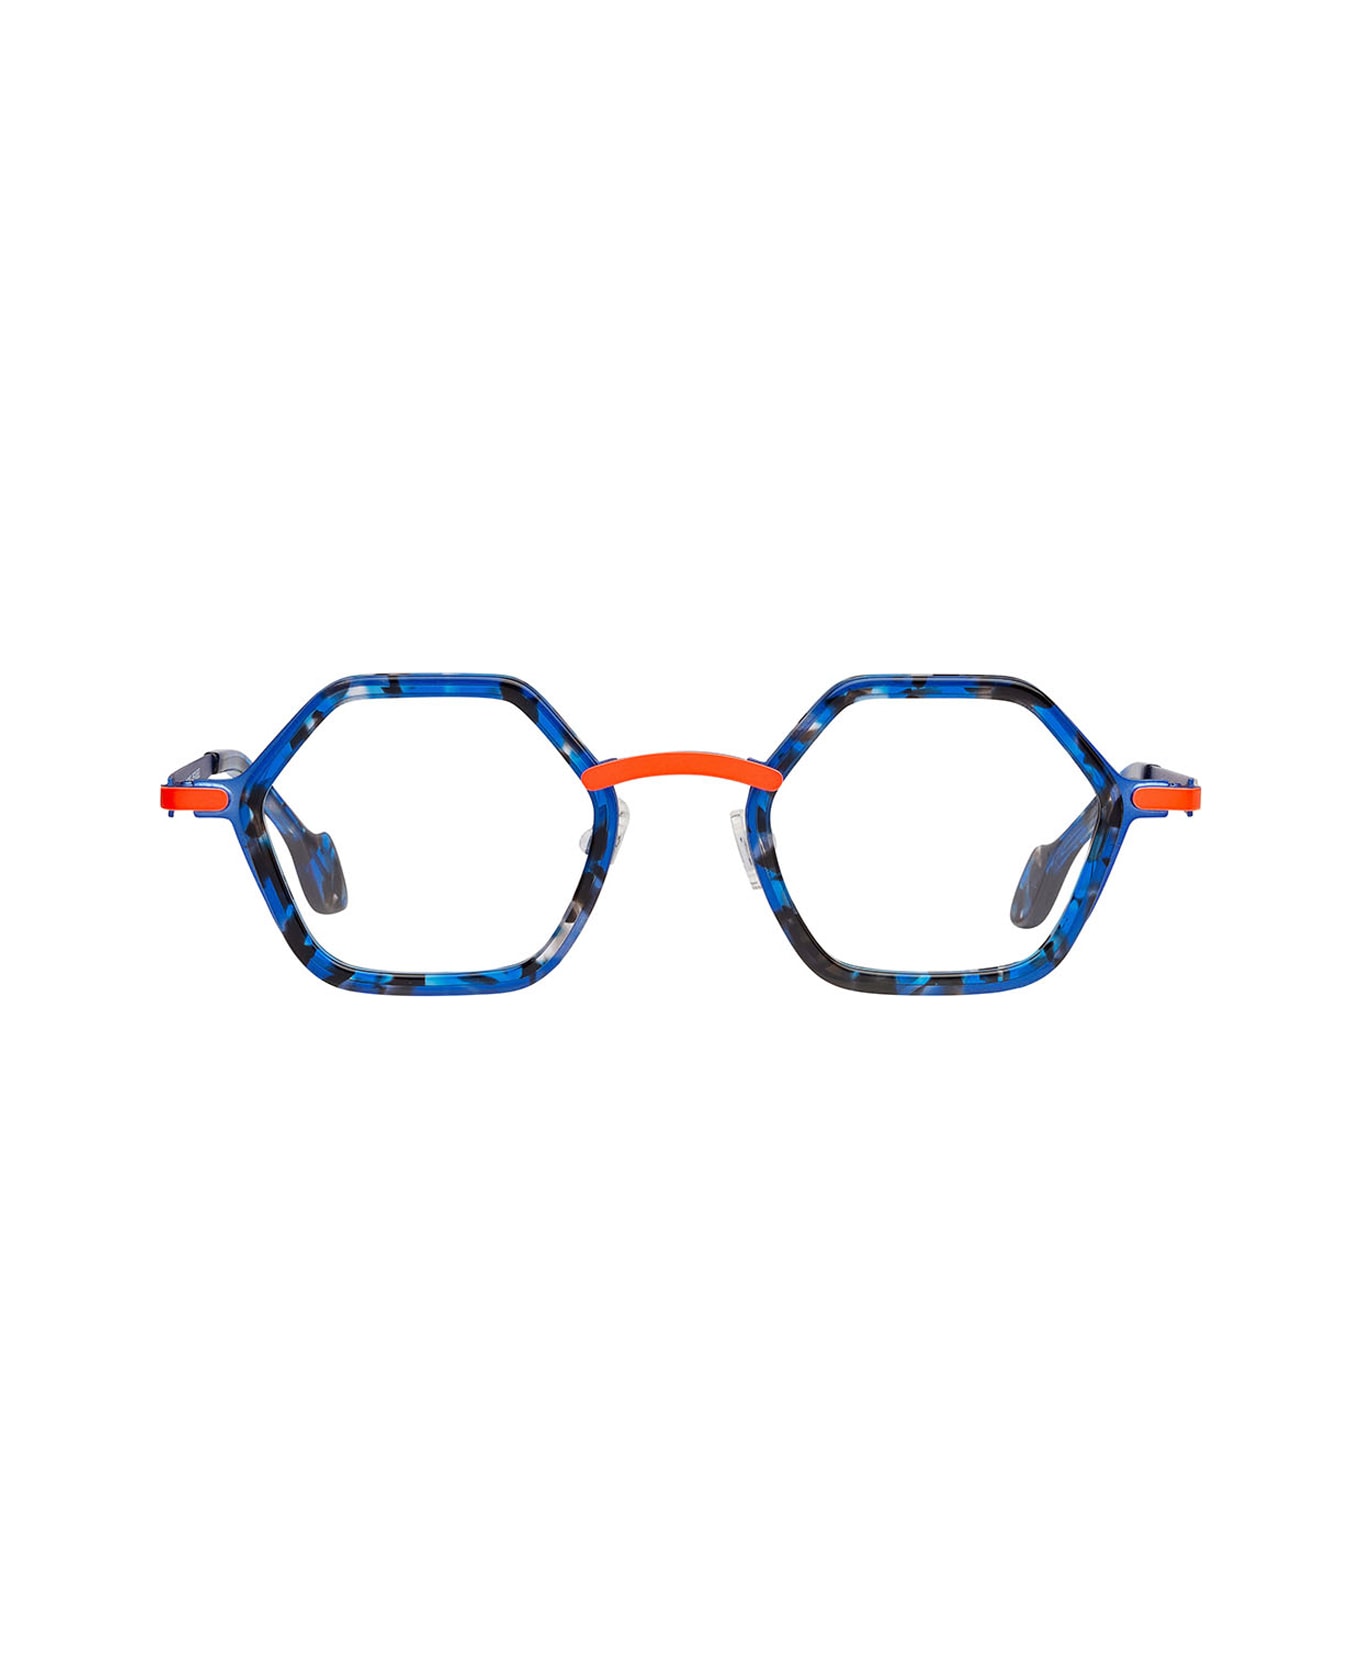 Matttew Gesa Glasses - Blu アイウェア